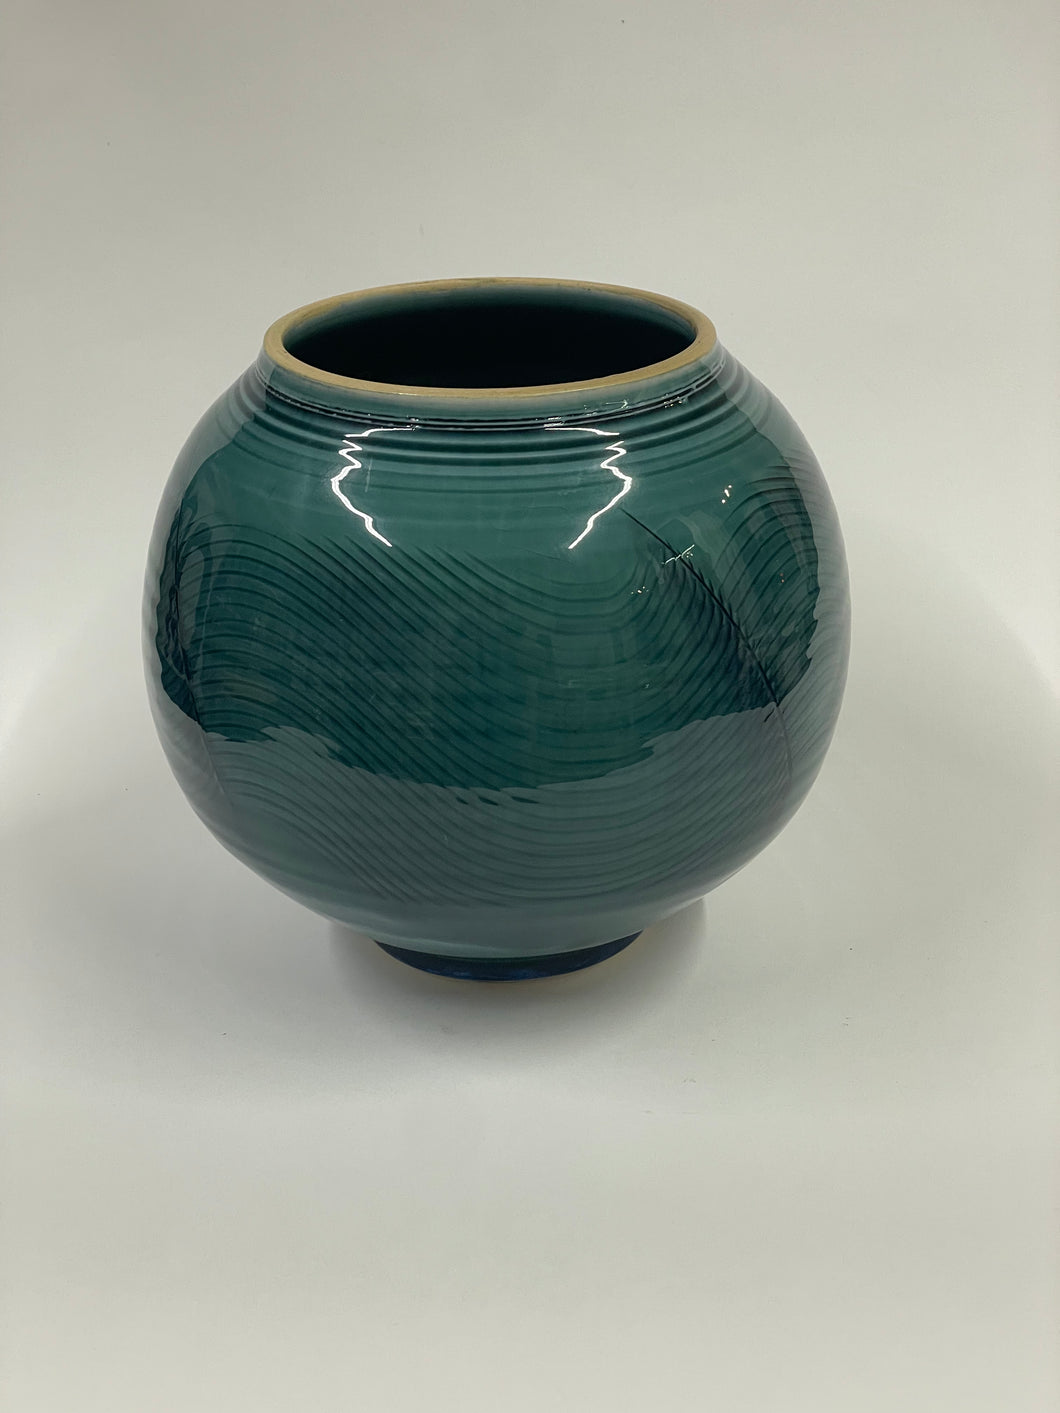 Russel Spillman - Signed Ceramic Vessel